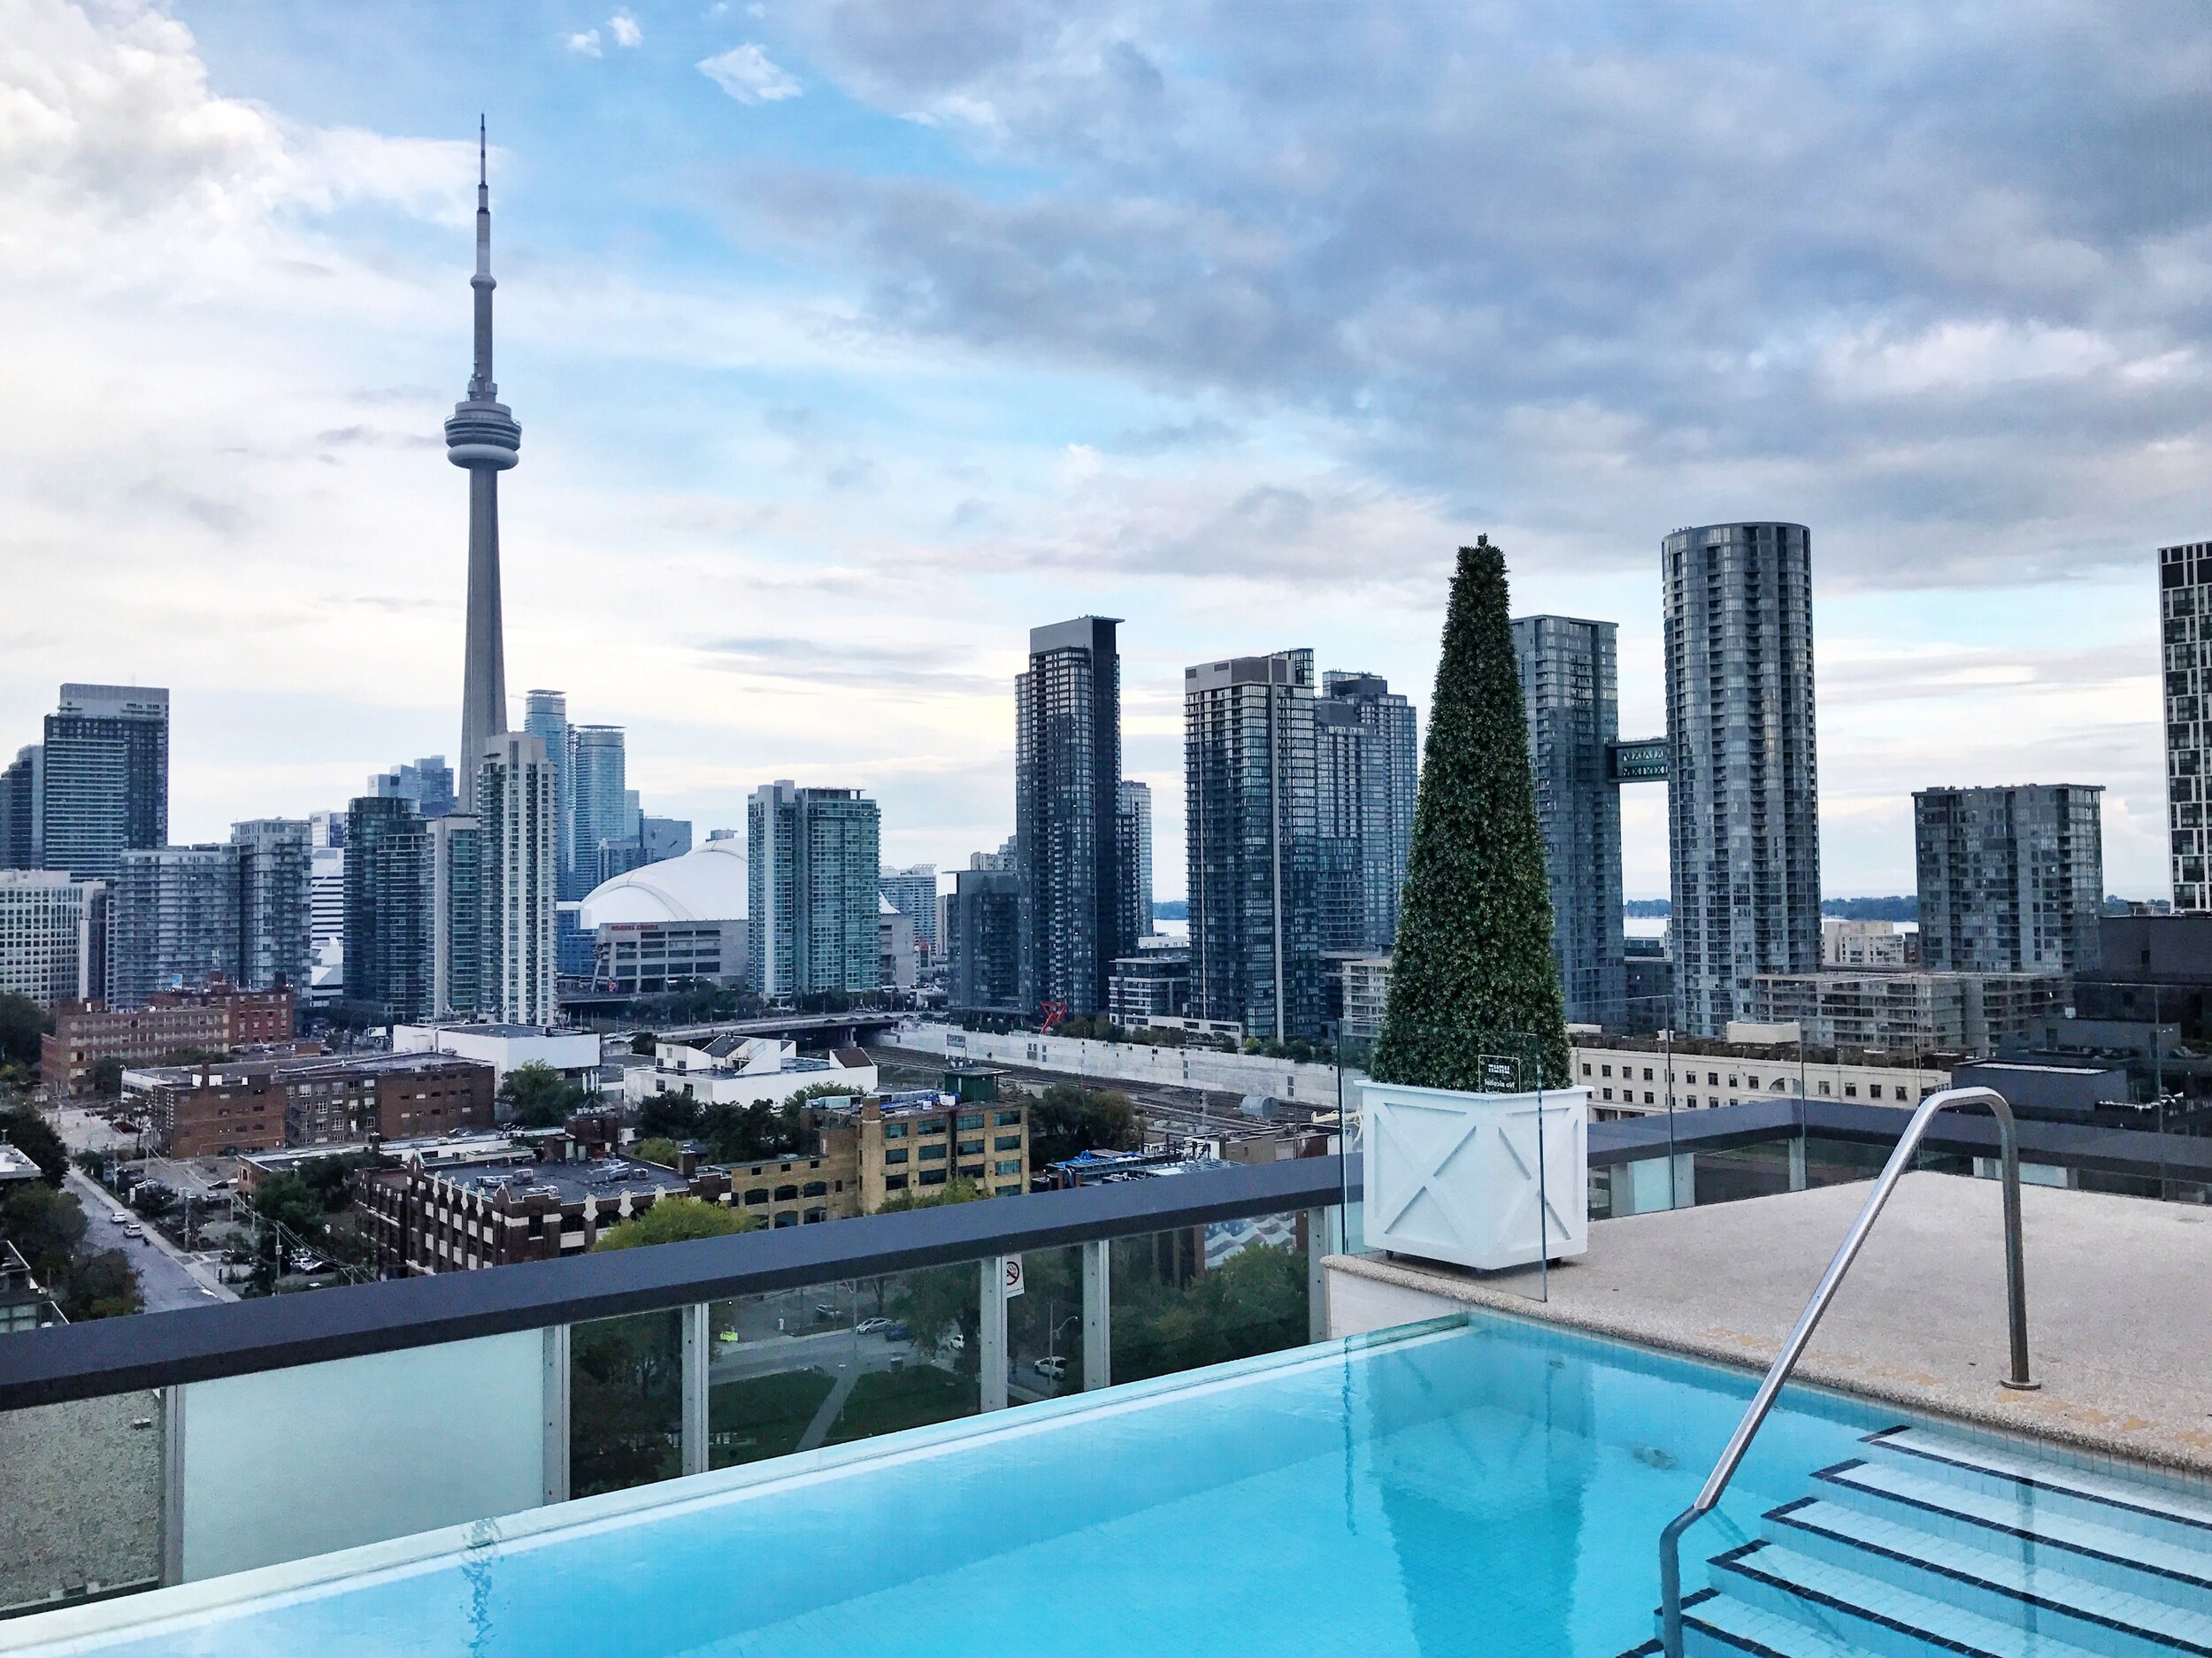 Thompson Hotel Rooftop Pool - Toronto, Ontario, Canada